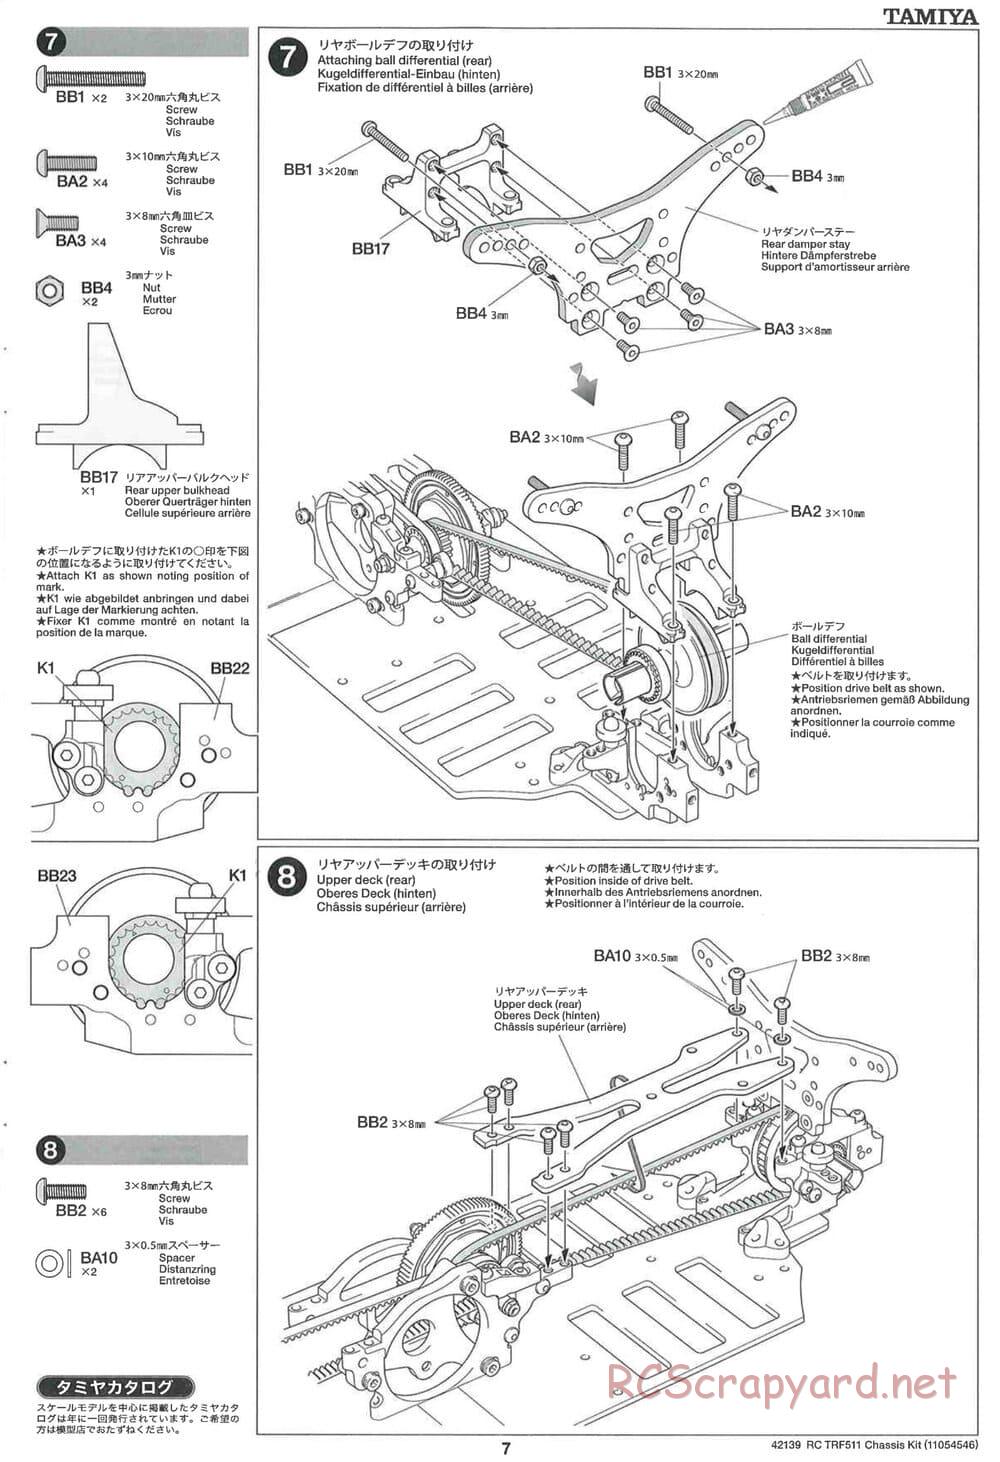 Tamiya - TRF511 Chassis - Manual - Page 7